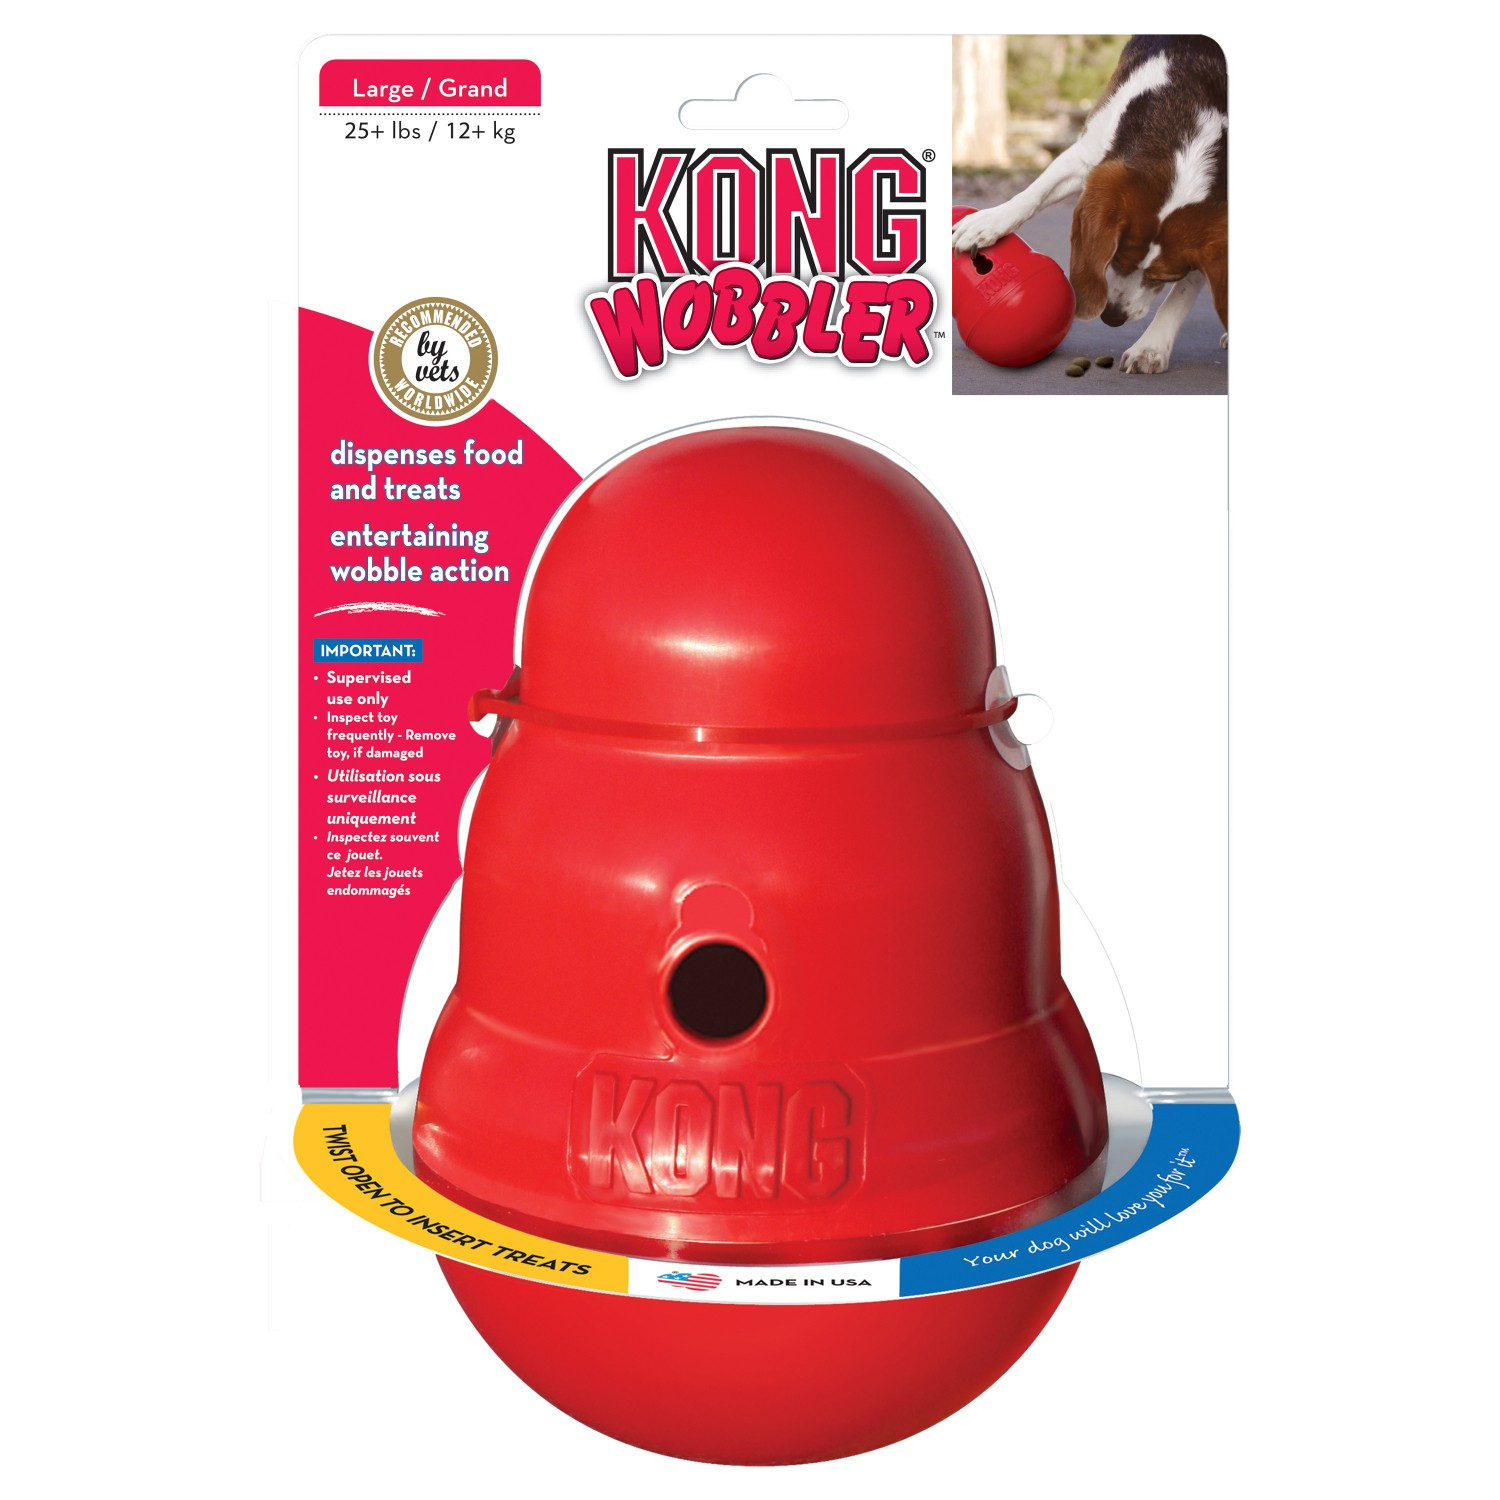 KONG cane Wobbler - distributore di cibo